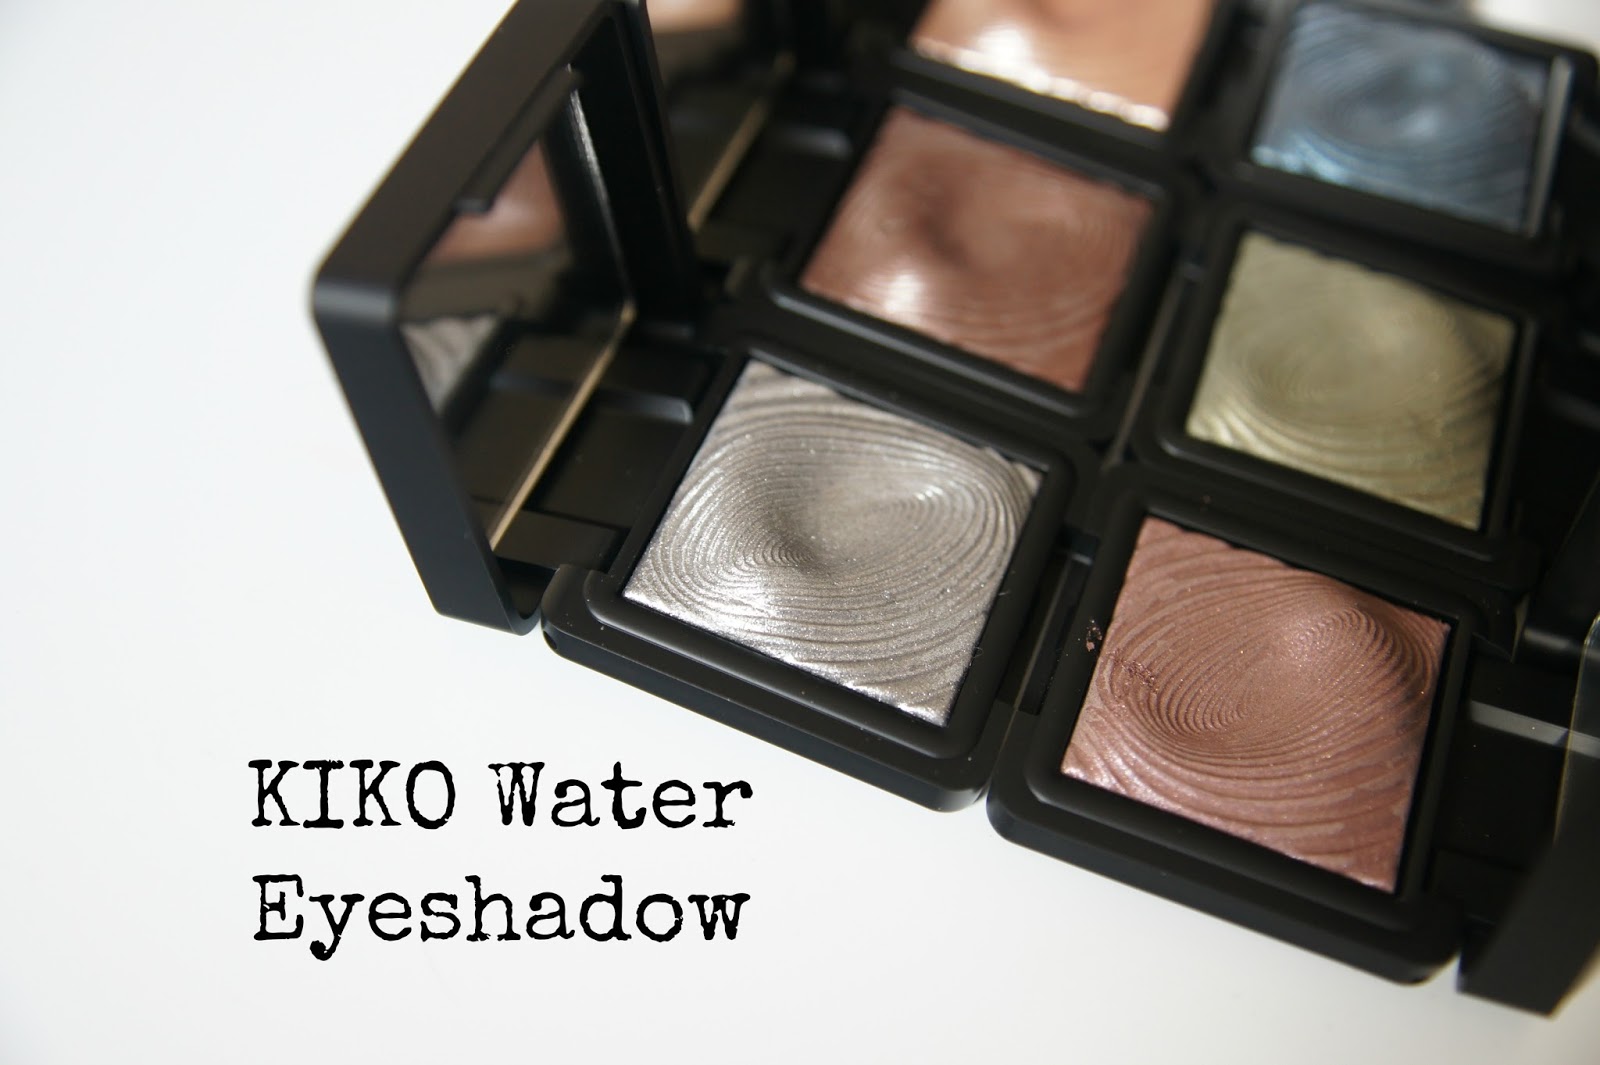 KIKO Water eyeshadow review,